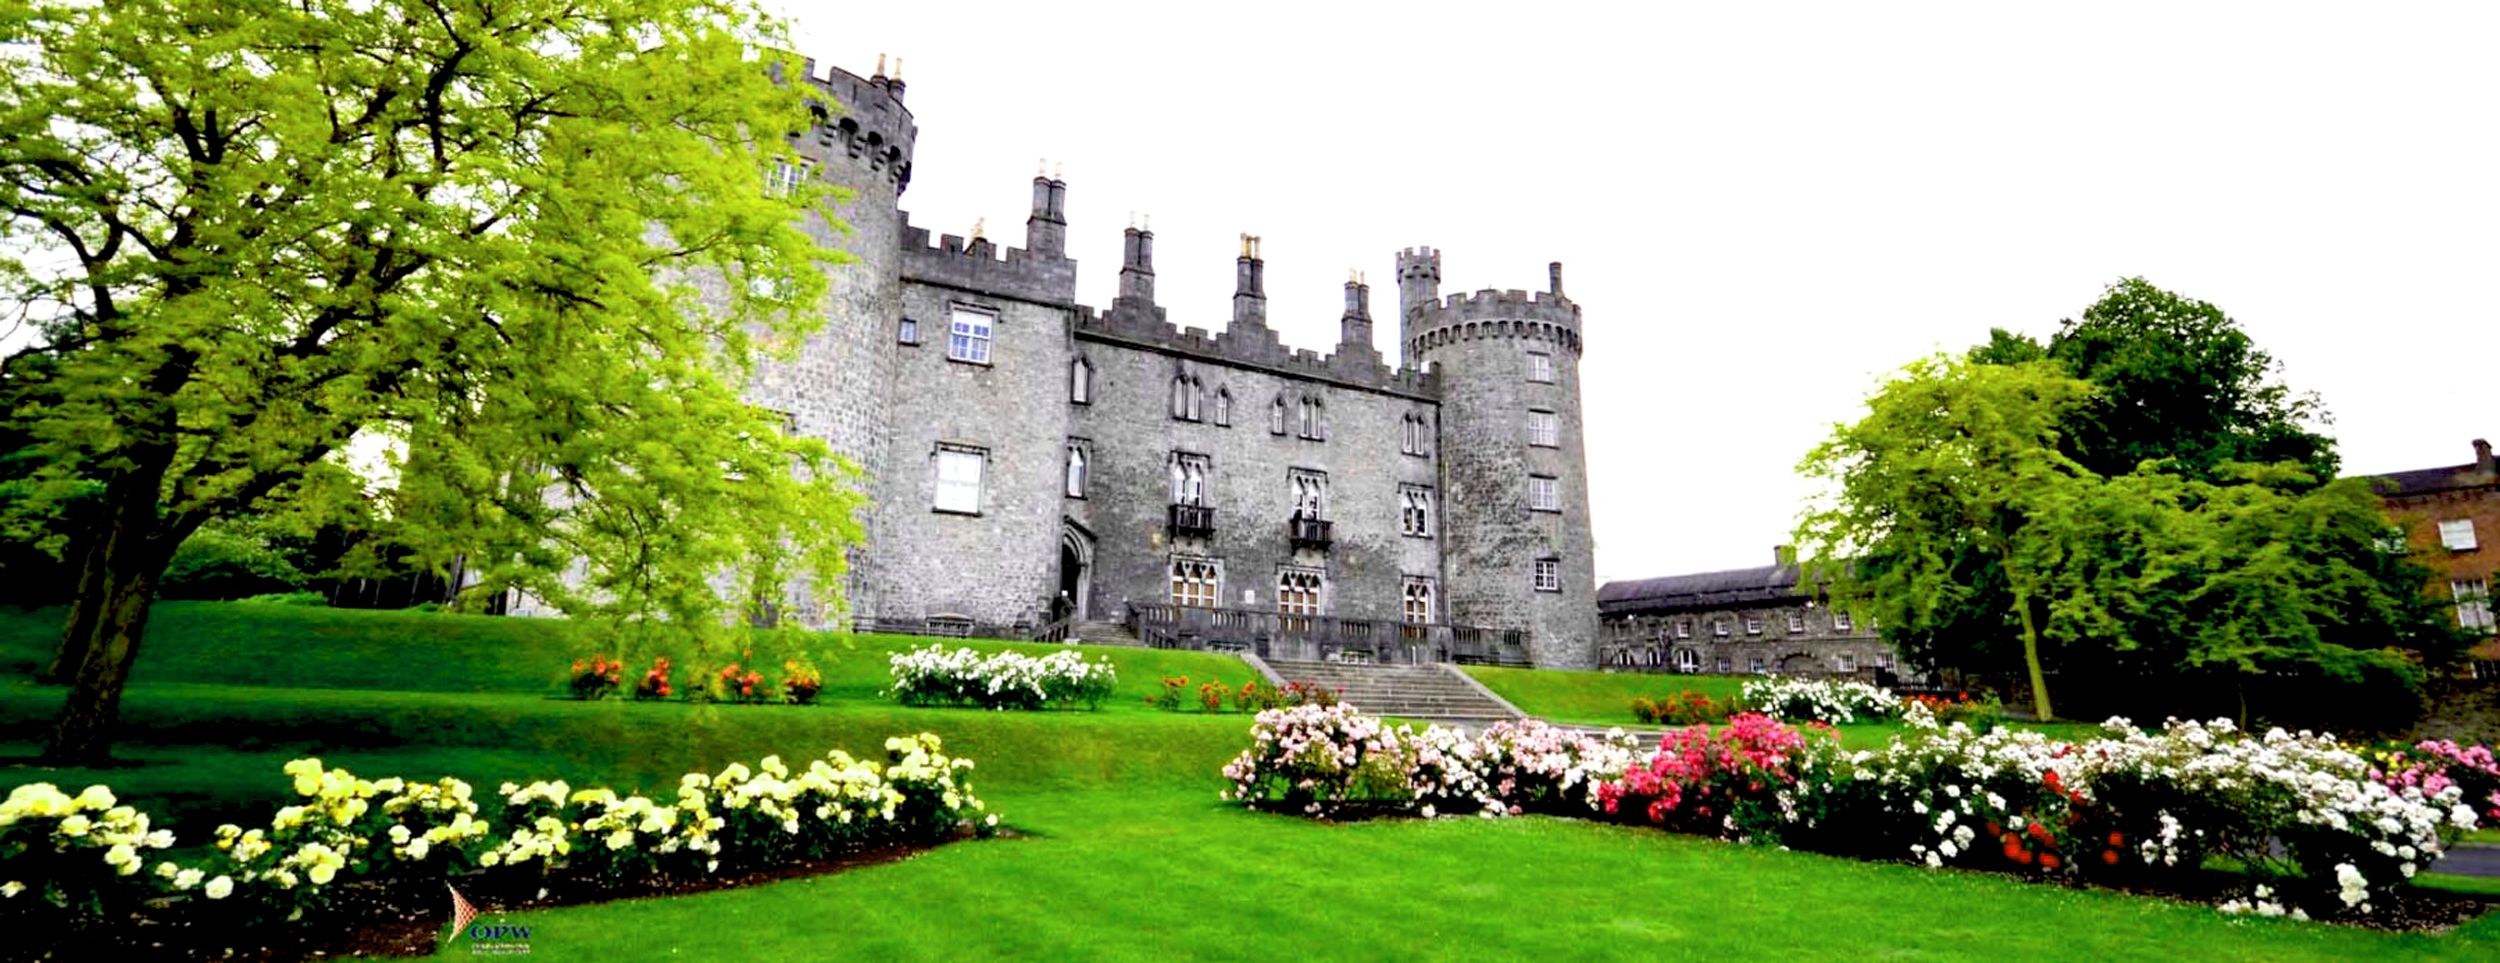 Highlights of Kilkenny Castle